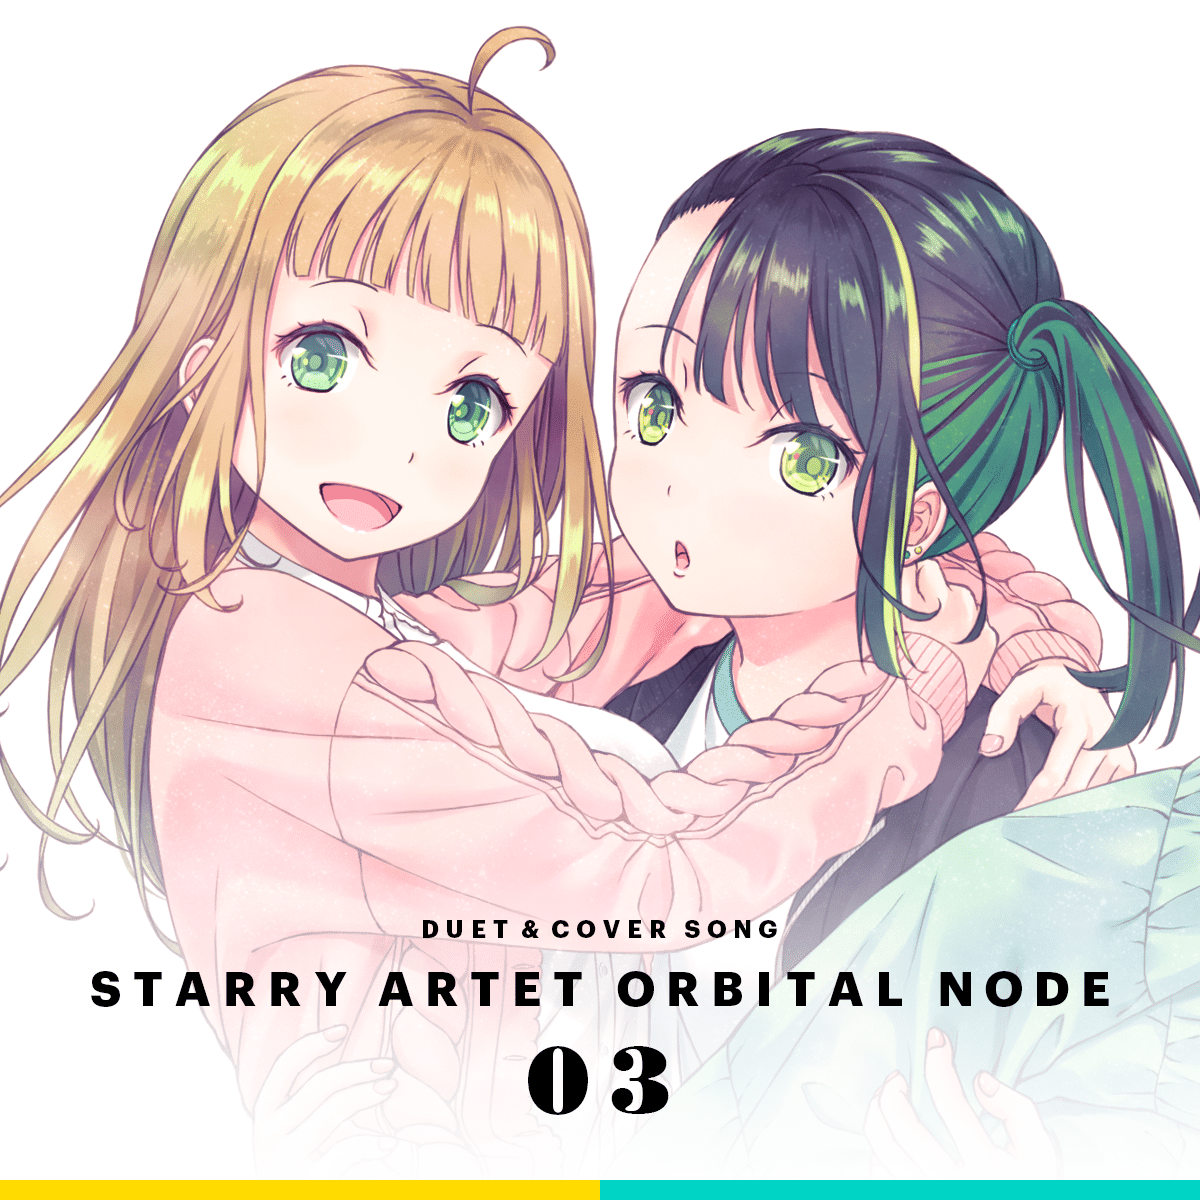 STARRY ARTET ORBITAL NODE 03